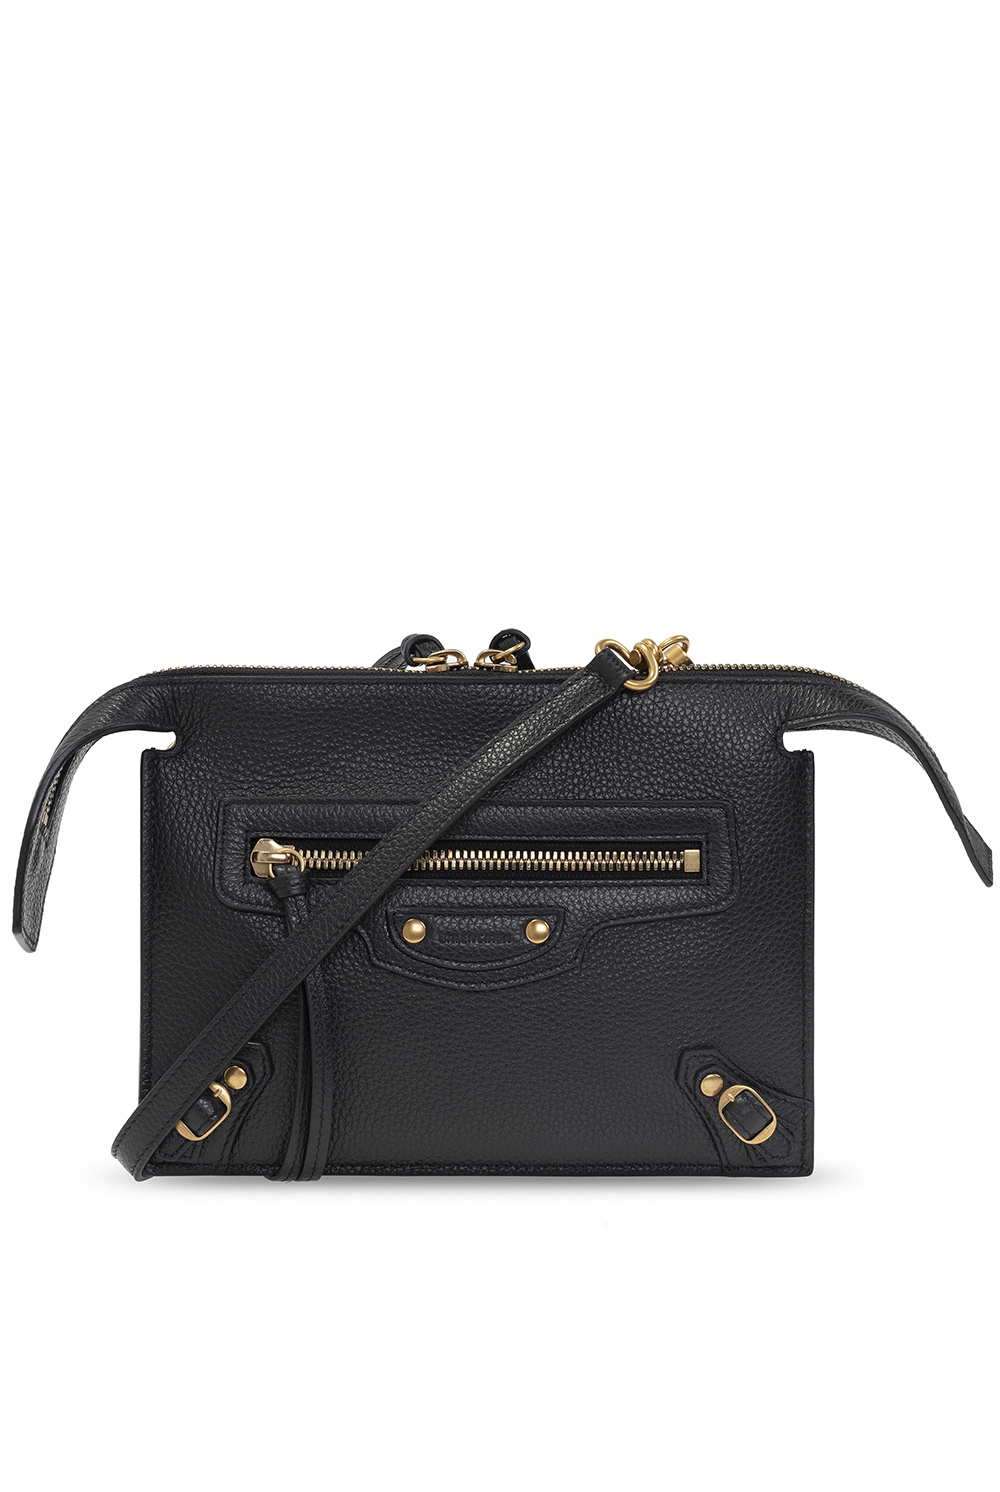 Louis Vuitton Goldtone Porte Cles Delight Key Holder and Bag Charm